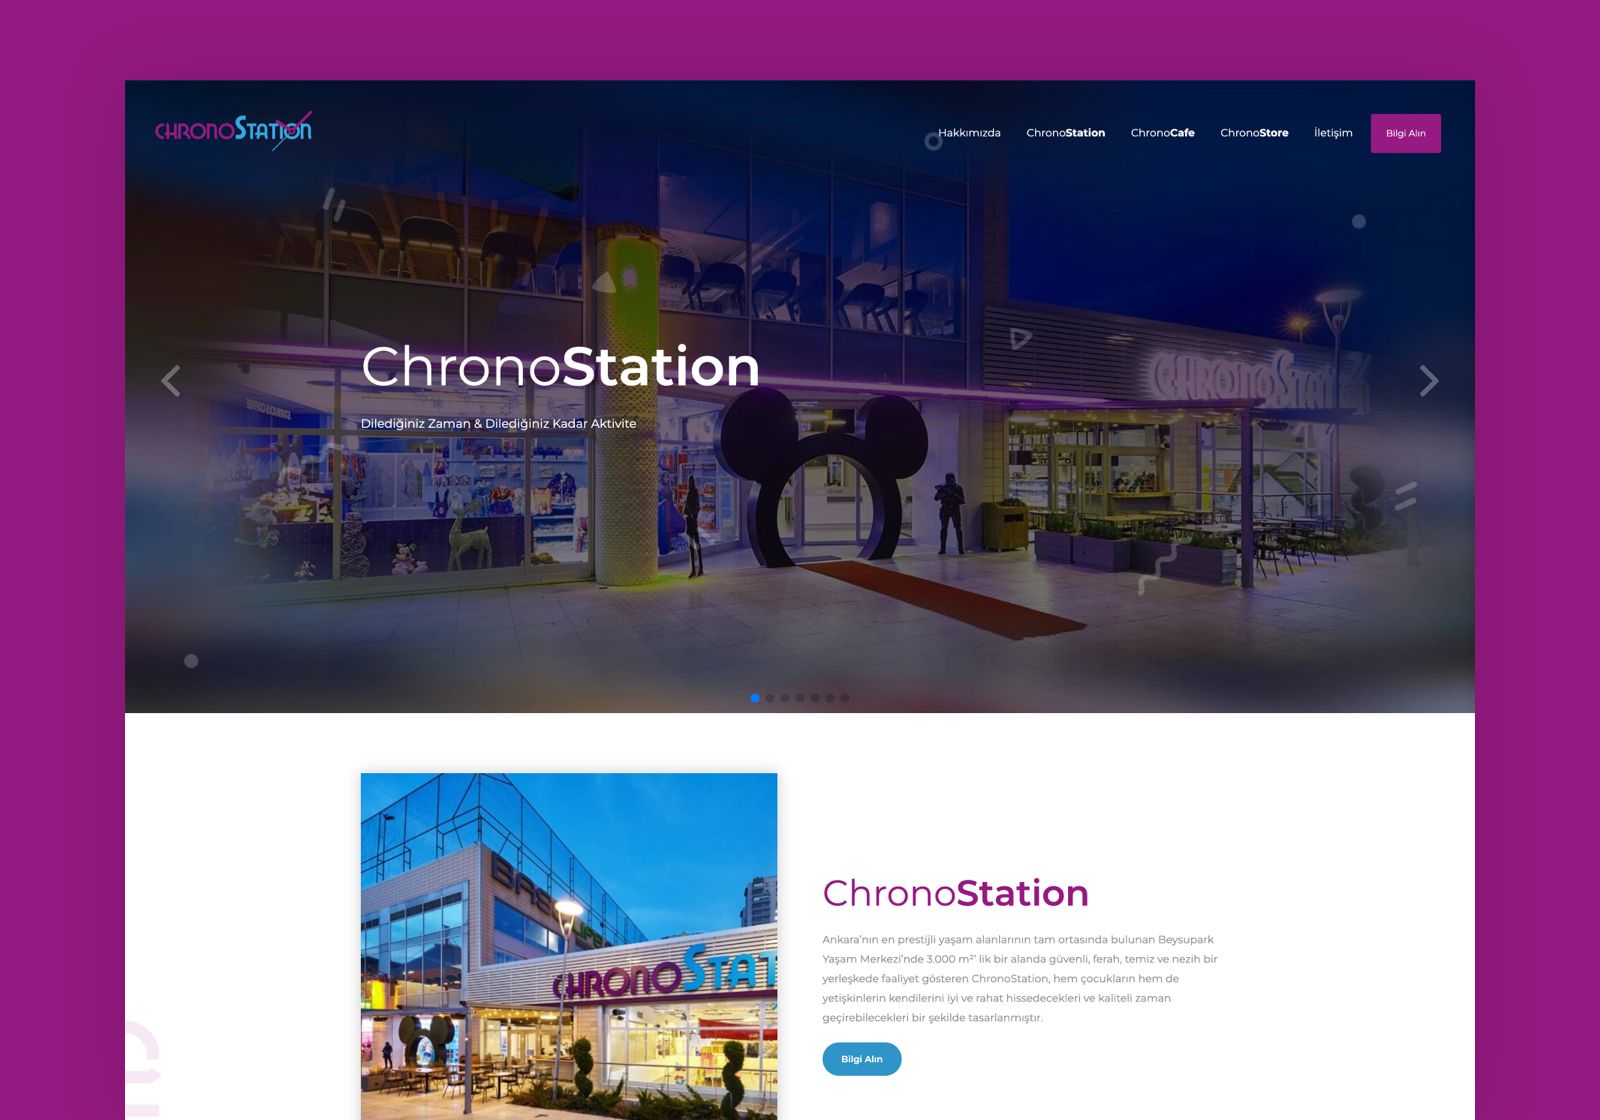 Chrono Station